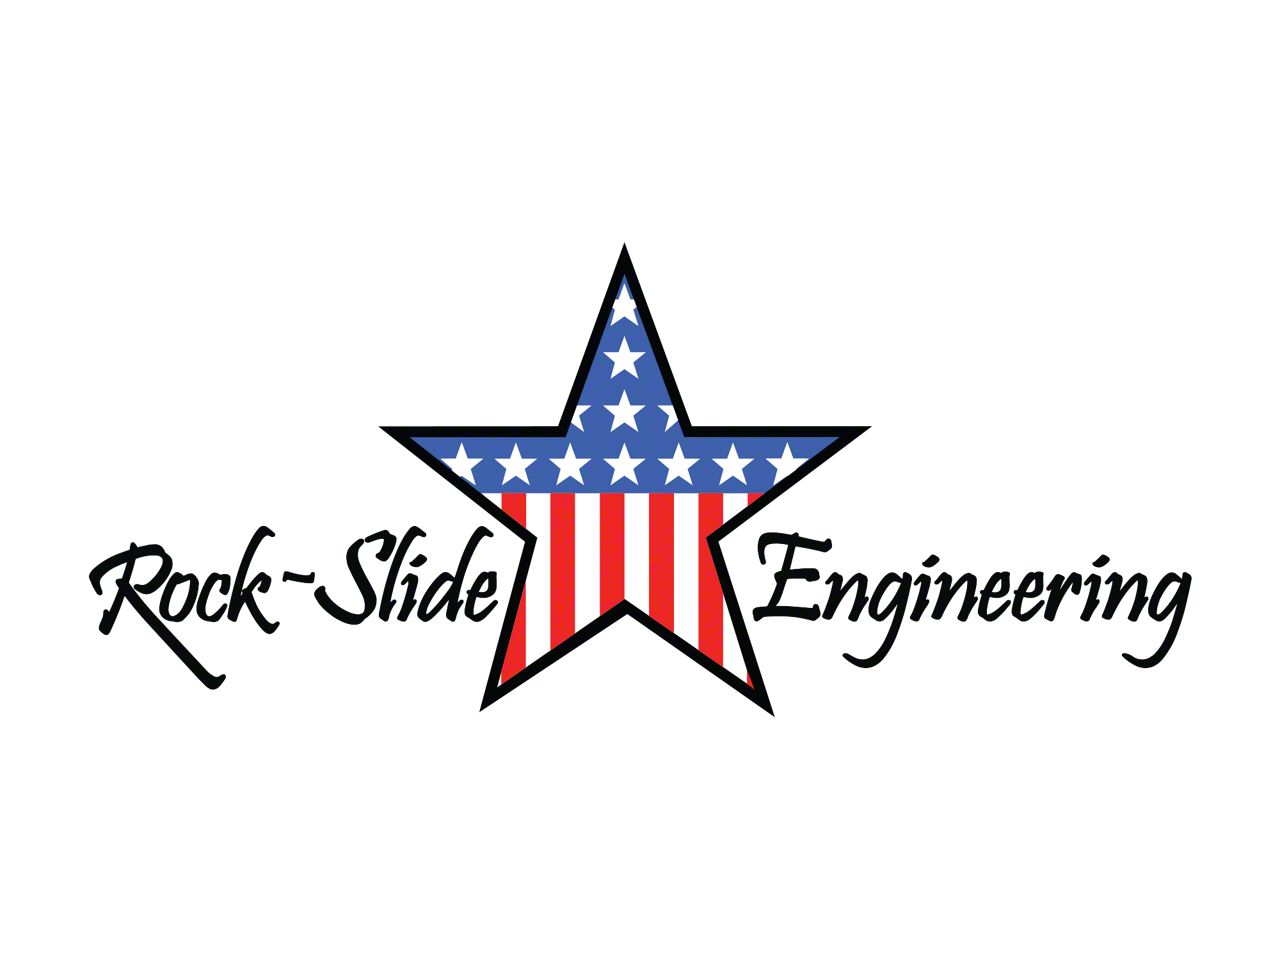 Rock-Slide Engineering Parts